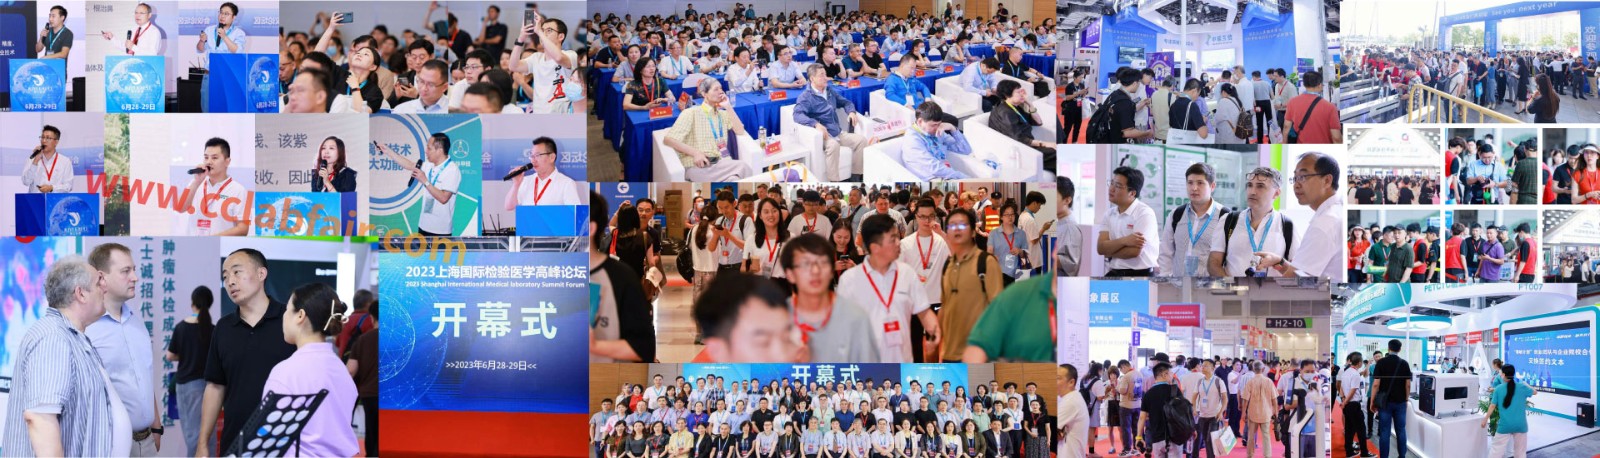 CEIVD 2023 opened on June 28th in Shanghai